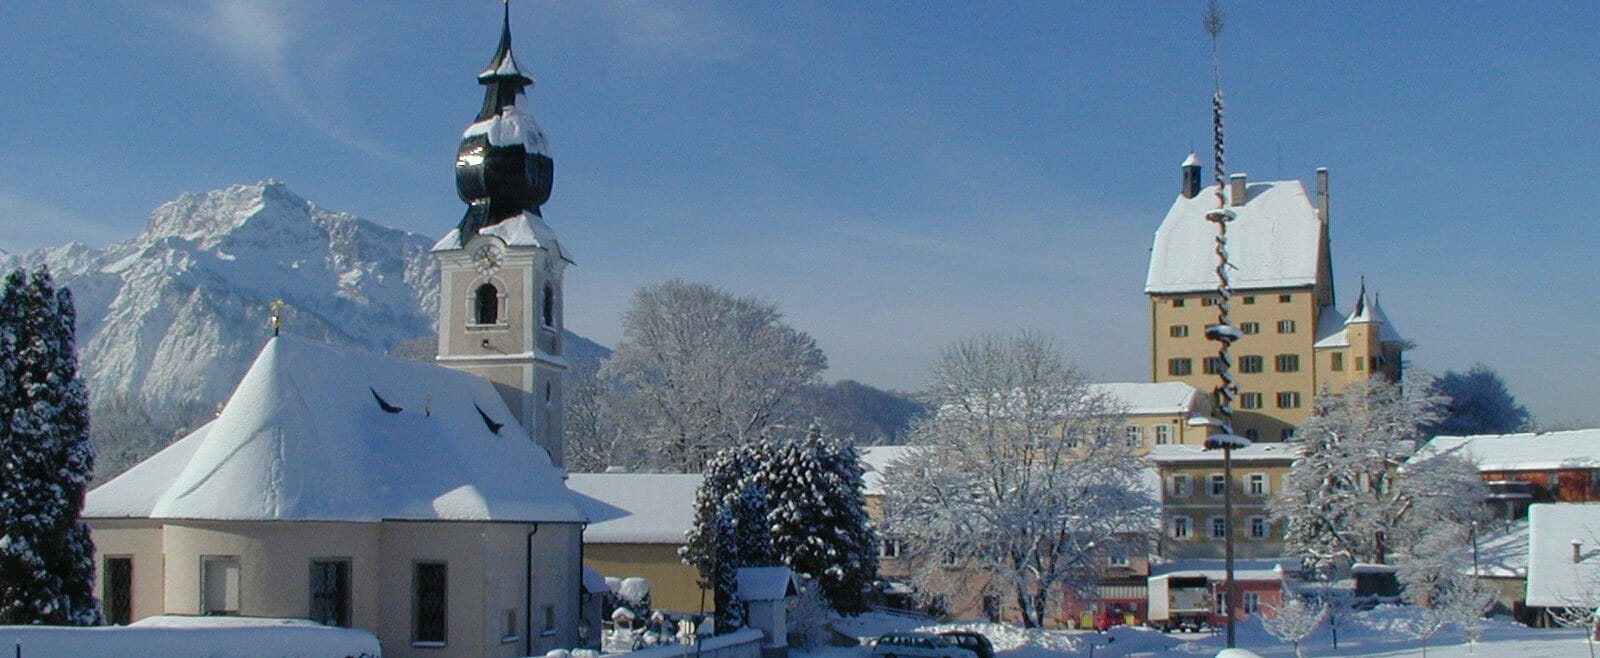 Winter in Elsbethen